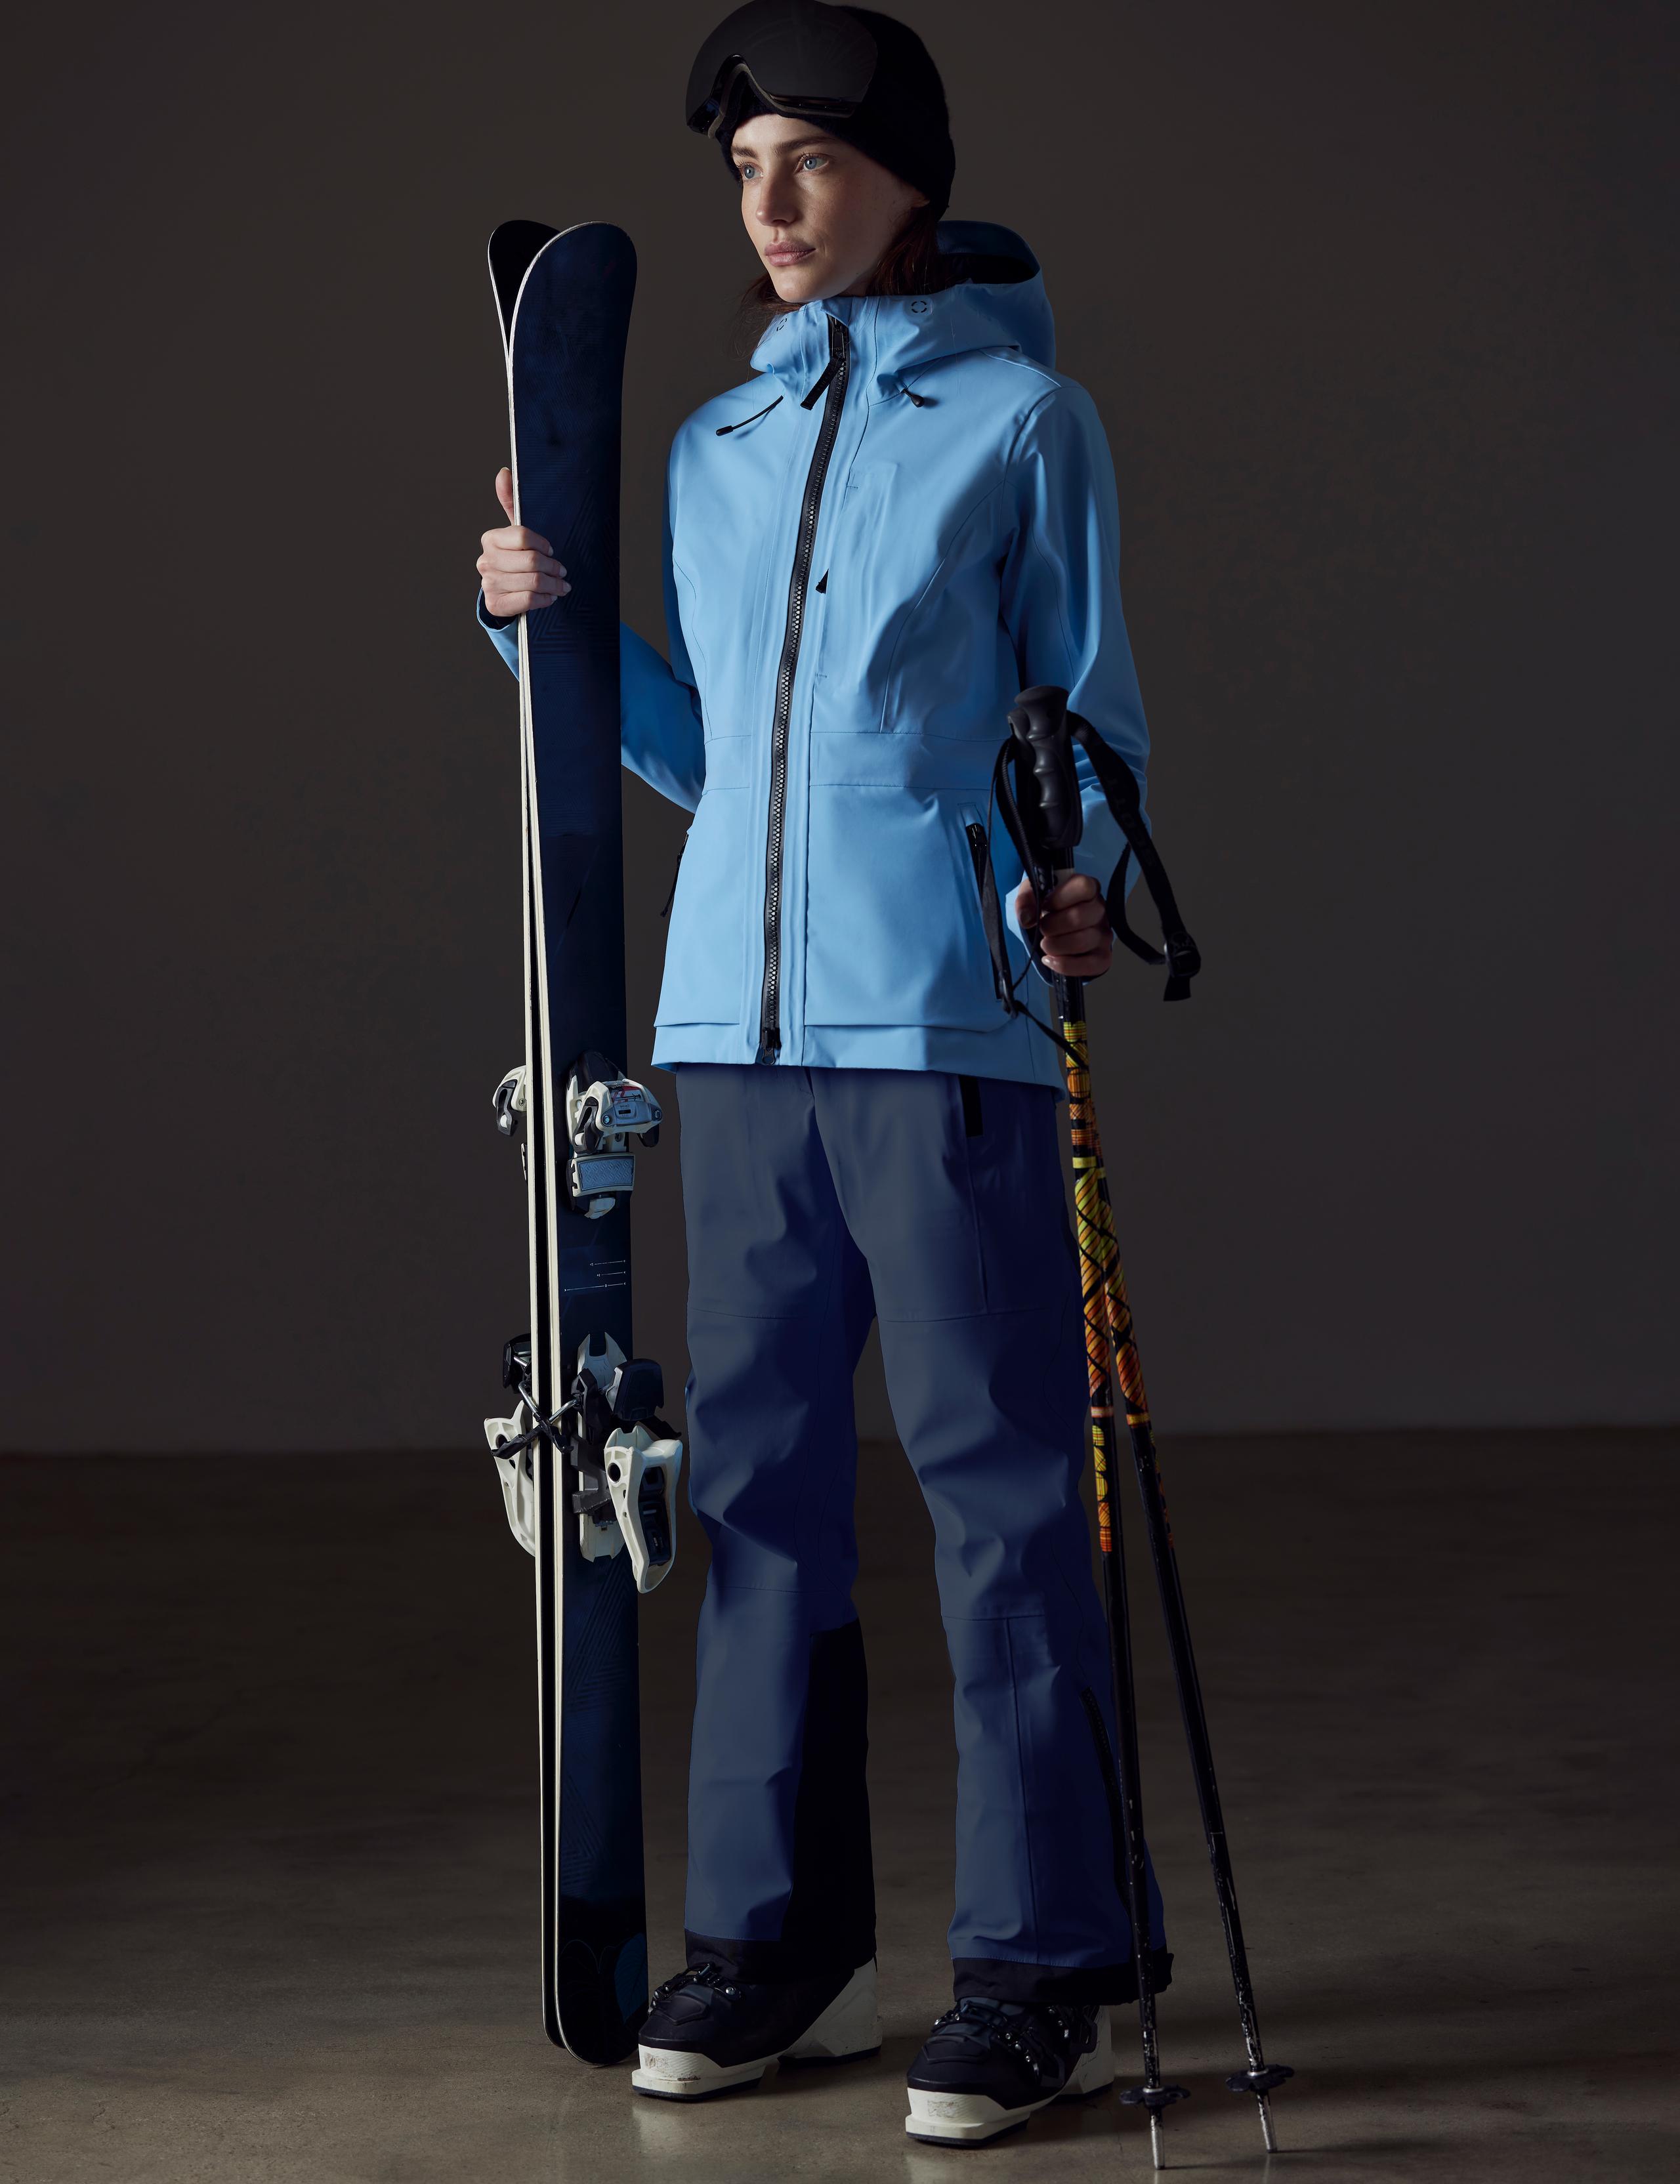 A woman in Boyd Ski Jacket holding skis